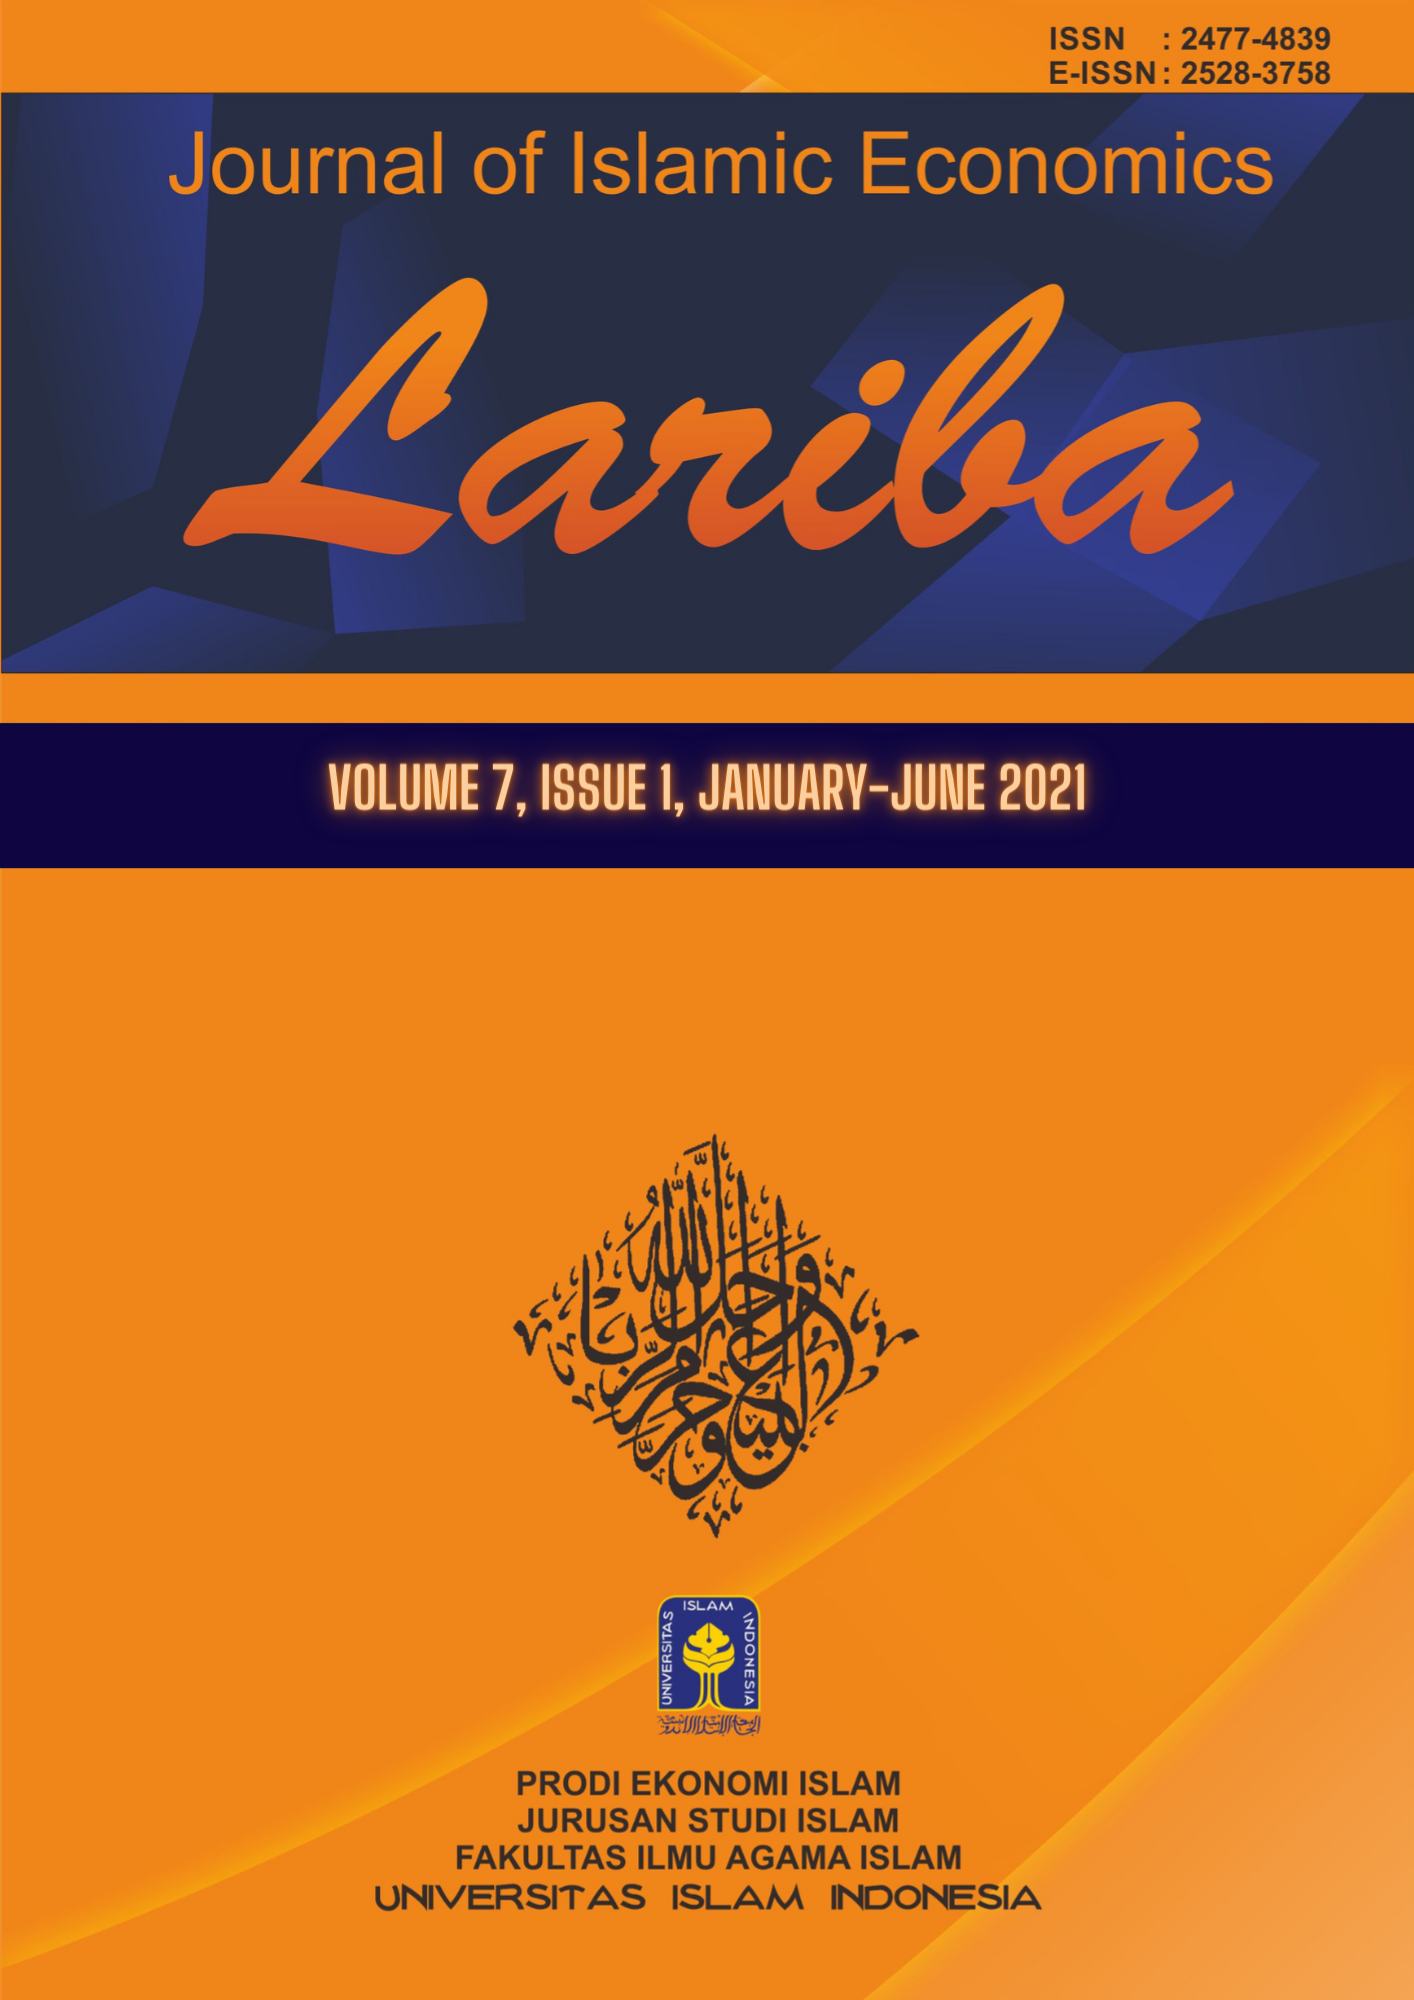 Cover JIELariba Volume 7, Issue 1, January-June 2021